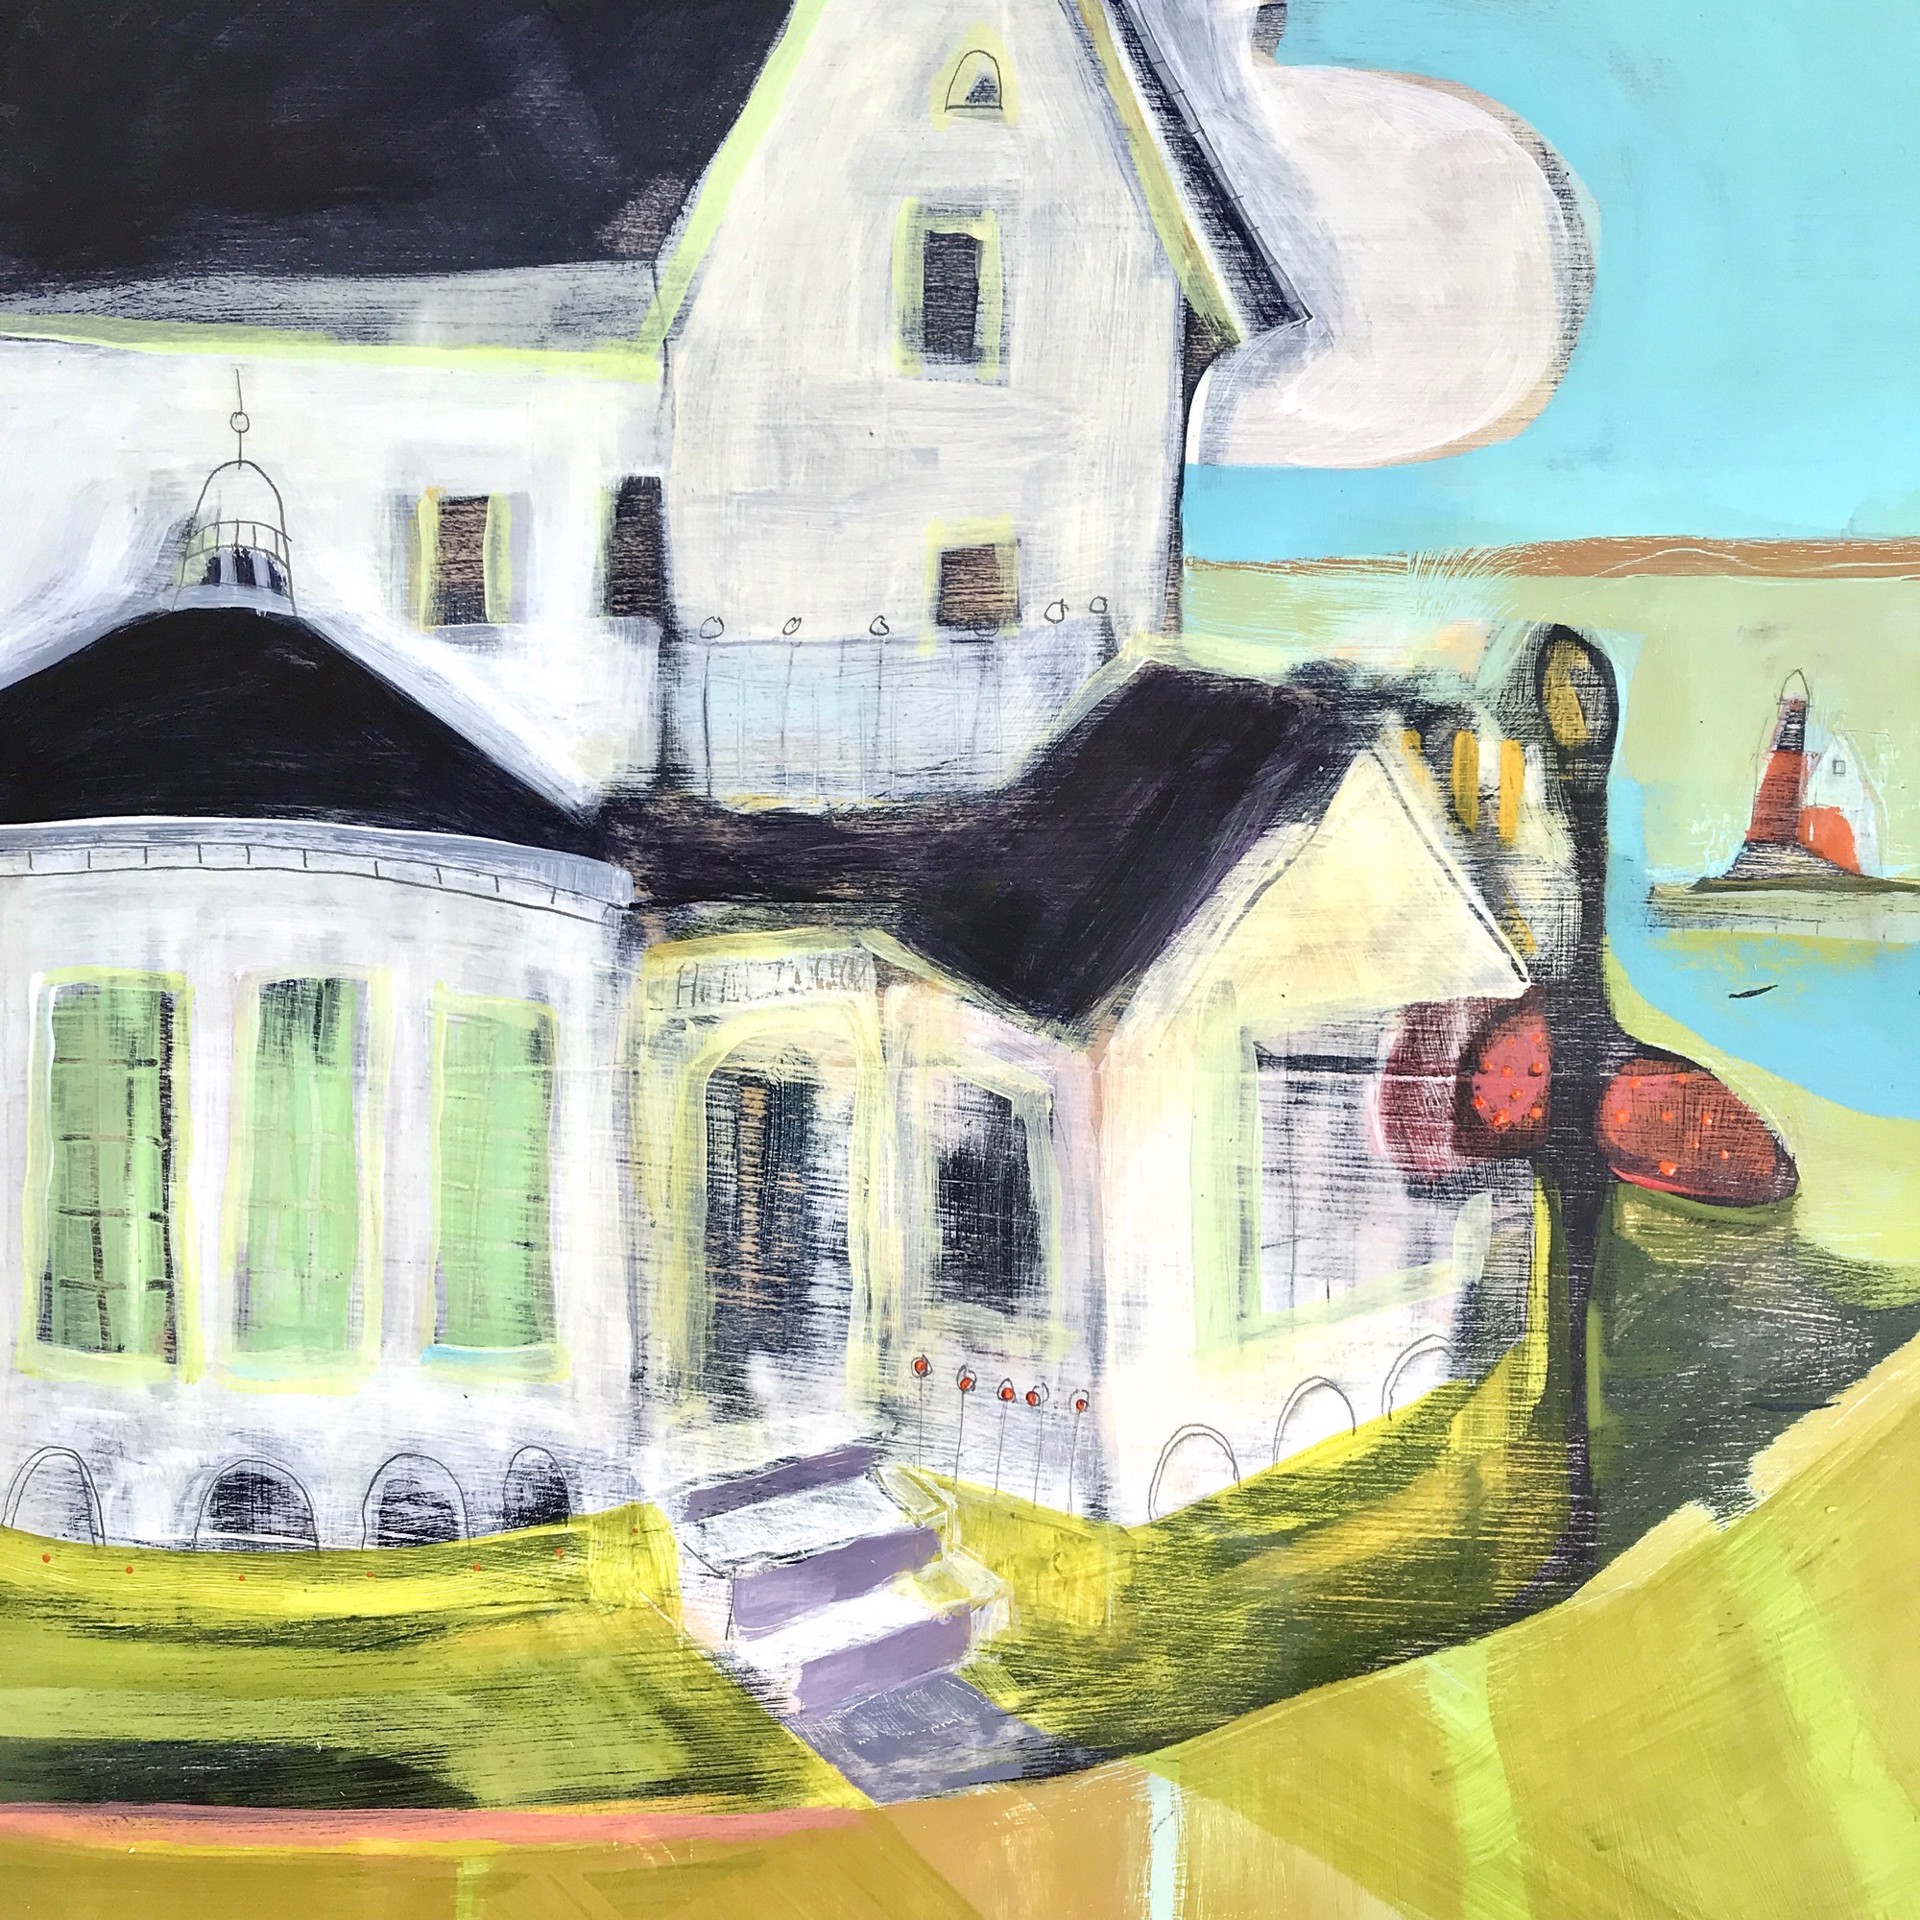 Hotel Iroquois, Lamppost, and Lighthouse, Mackinac Island by Rachael Van Dyke